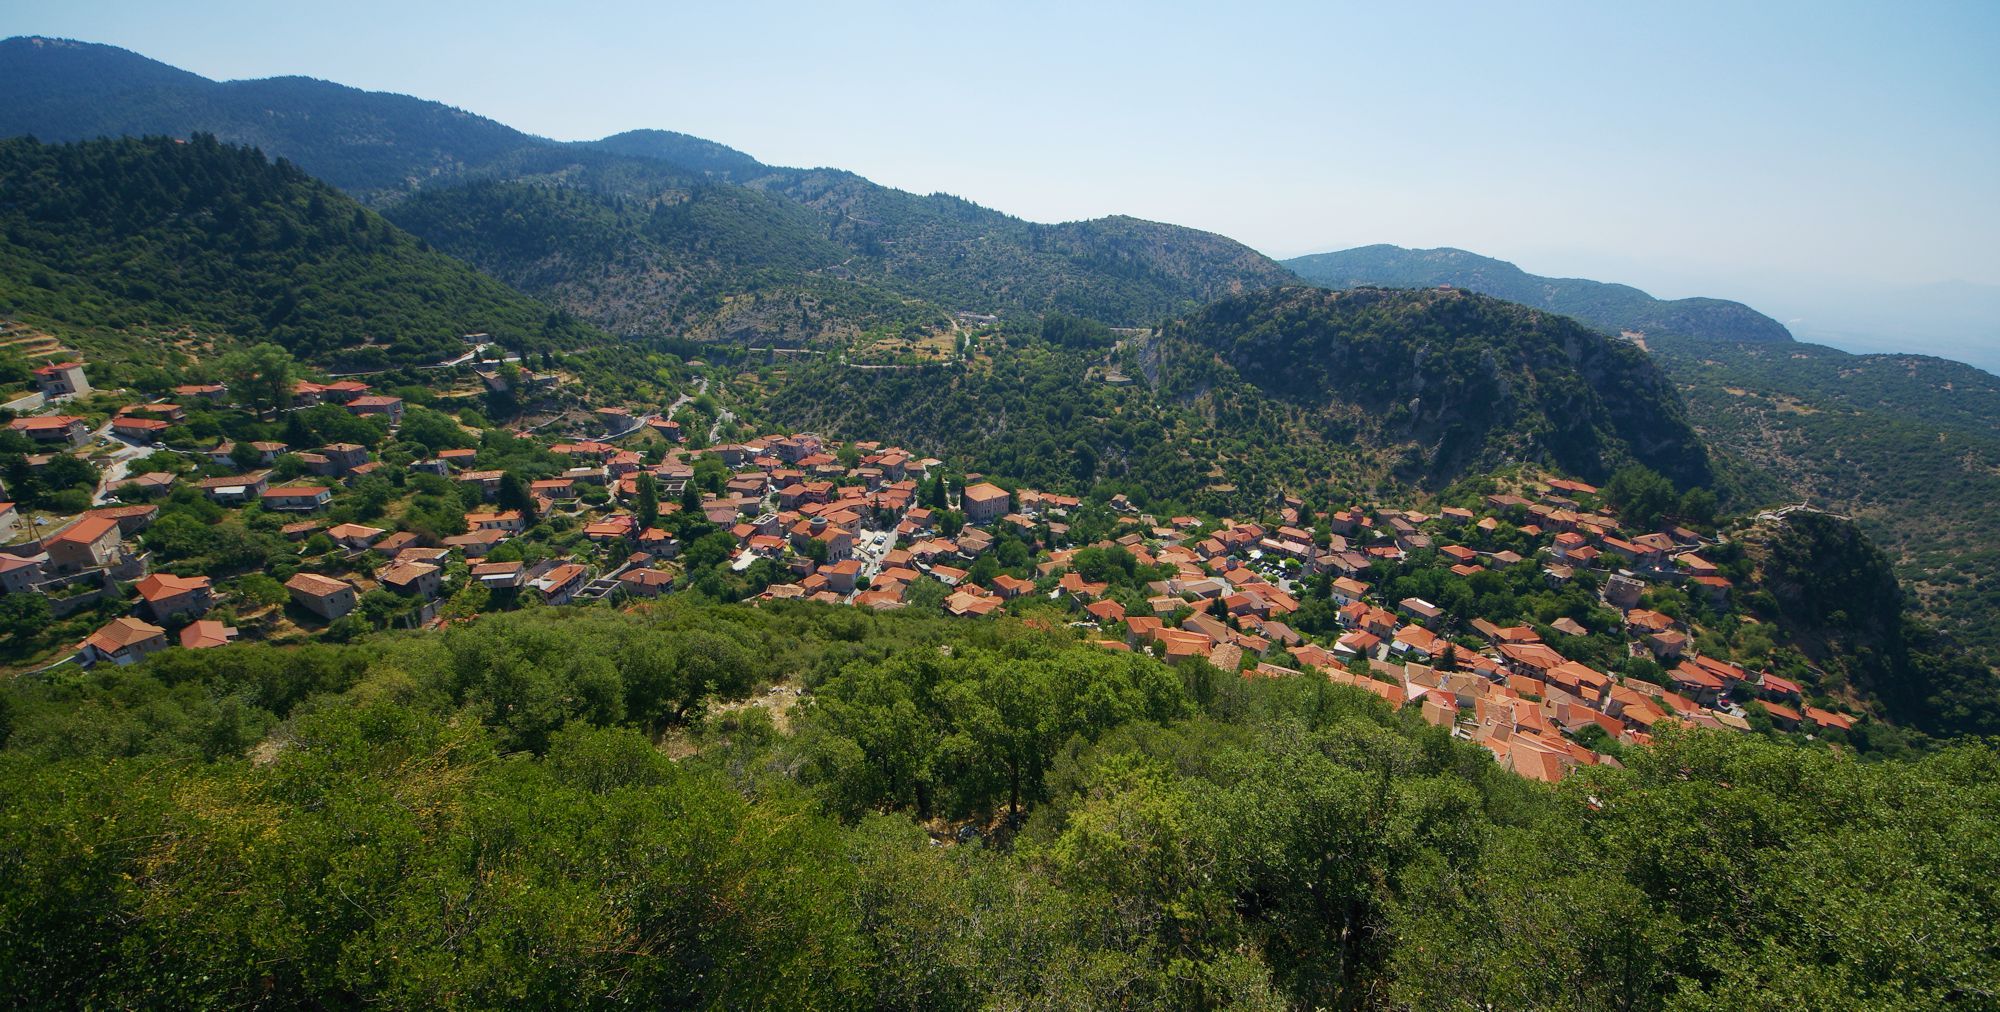 Stemnitsa: General view of the settlement